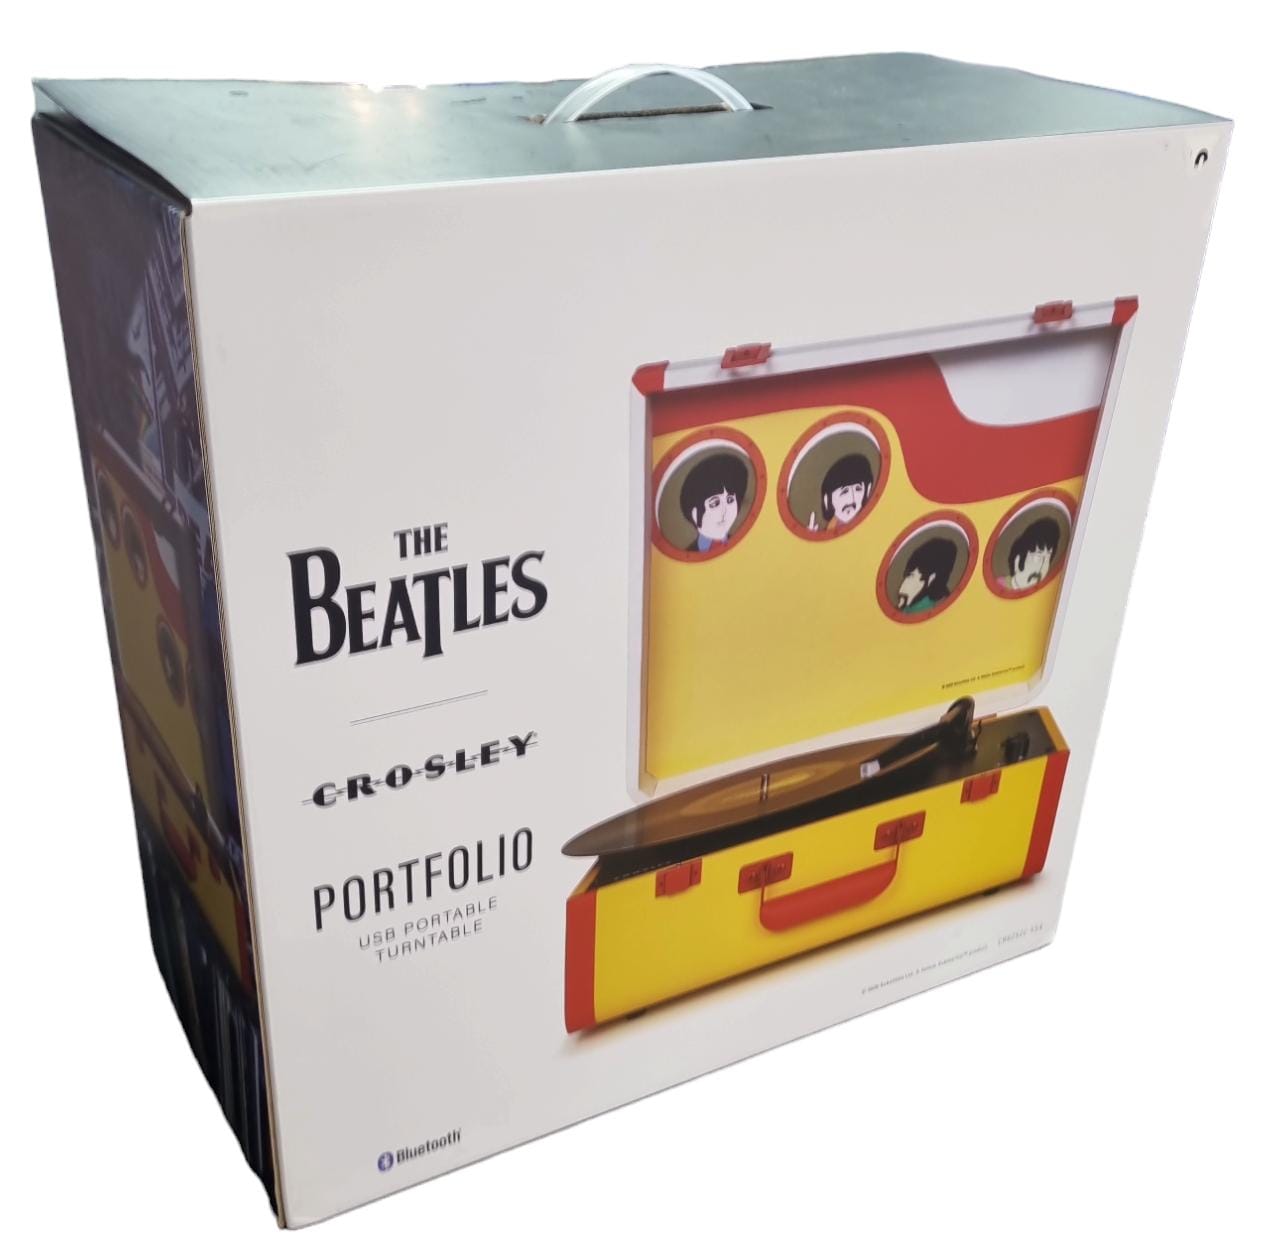 Crosley Portfolio USB Turntable - The Beatles Yellow Submarine Edition - BOXED